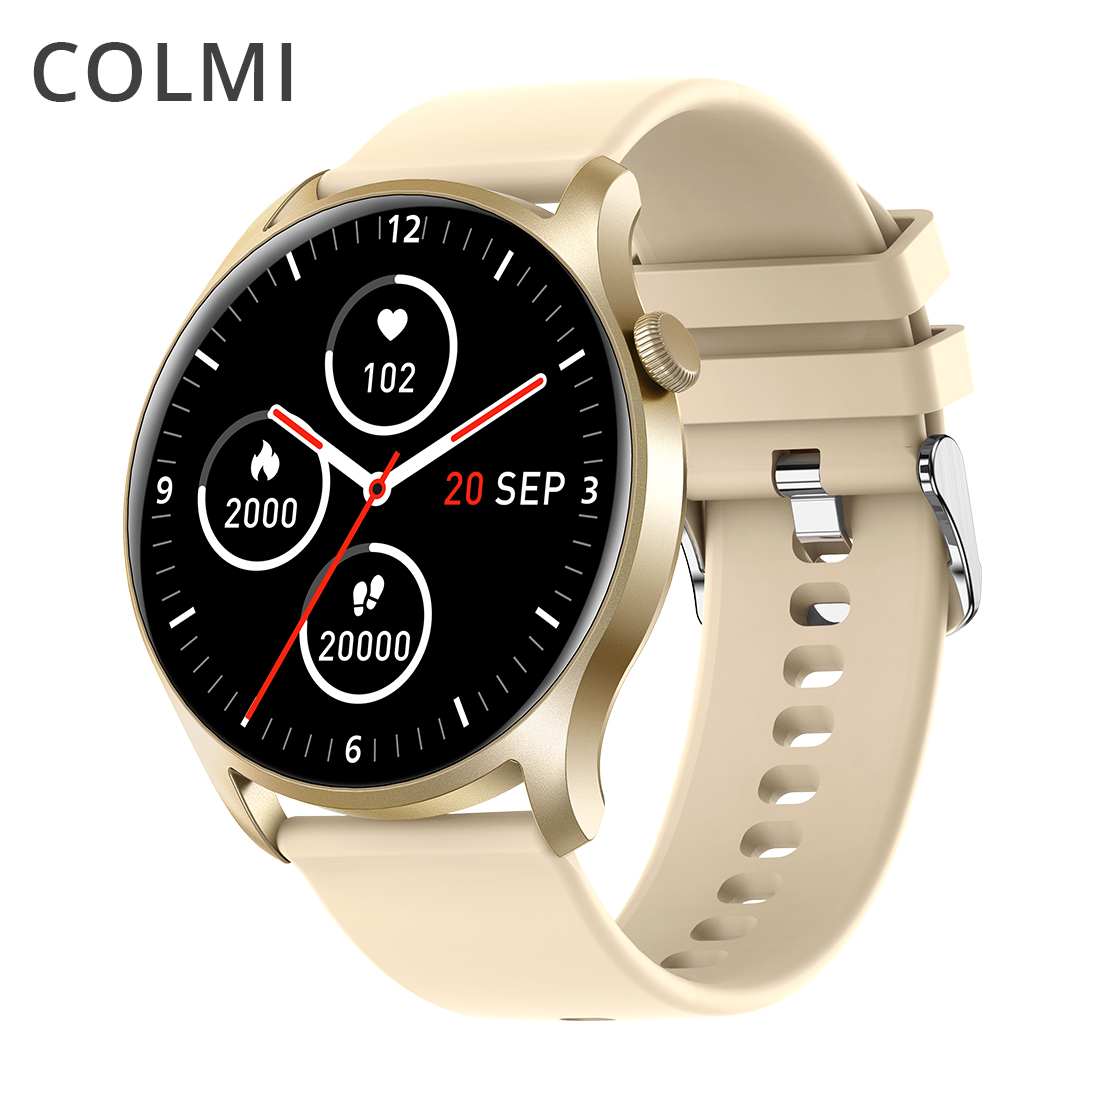 COLMI SKY 8 Smart Watch Women IP67 Waterproof Bluetooth Smartwatch Lehilahy ho an'ny Android i (8)